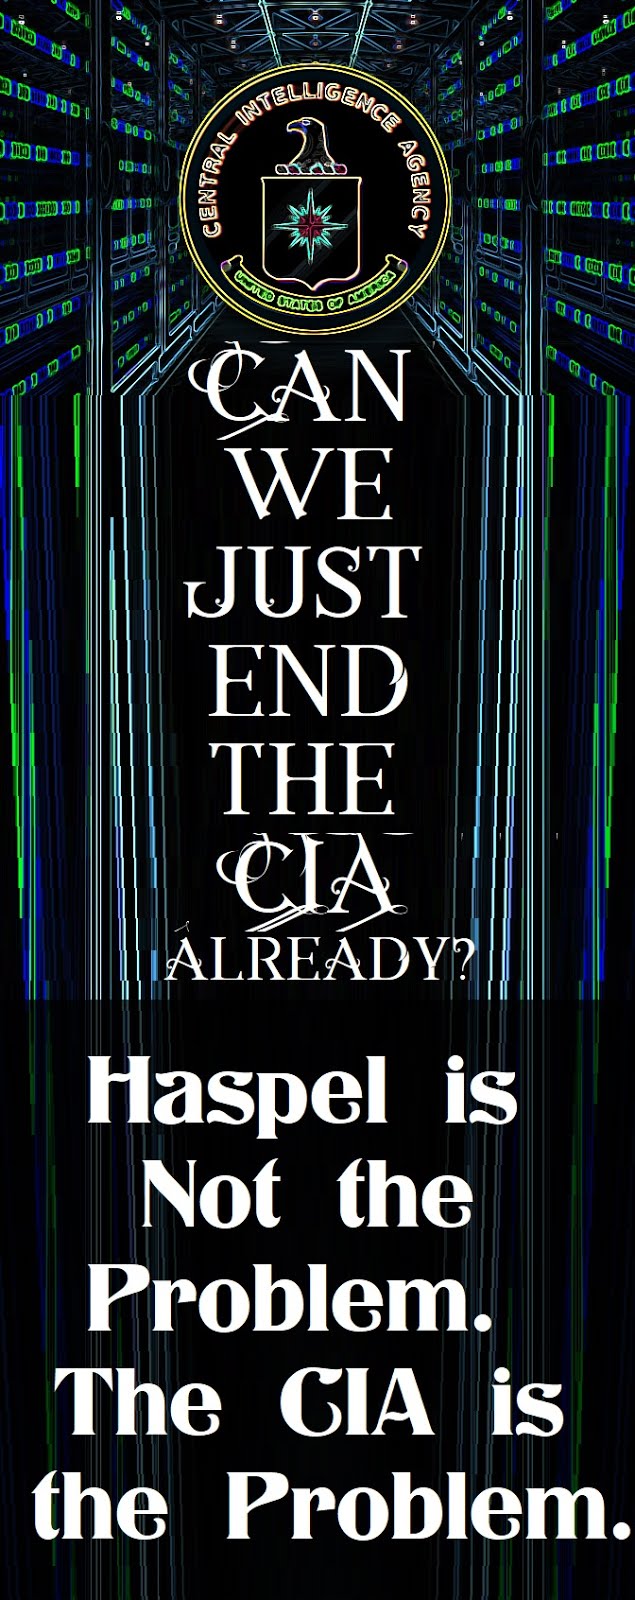 End The CIA!